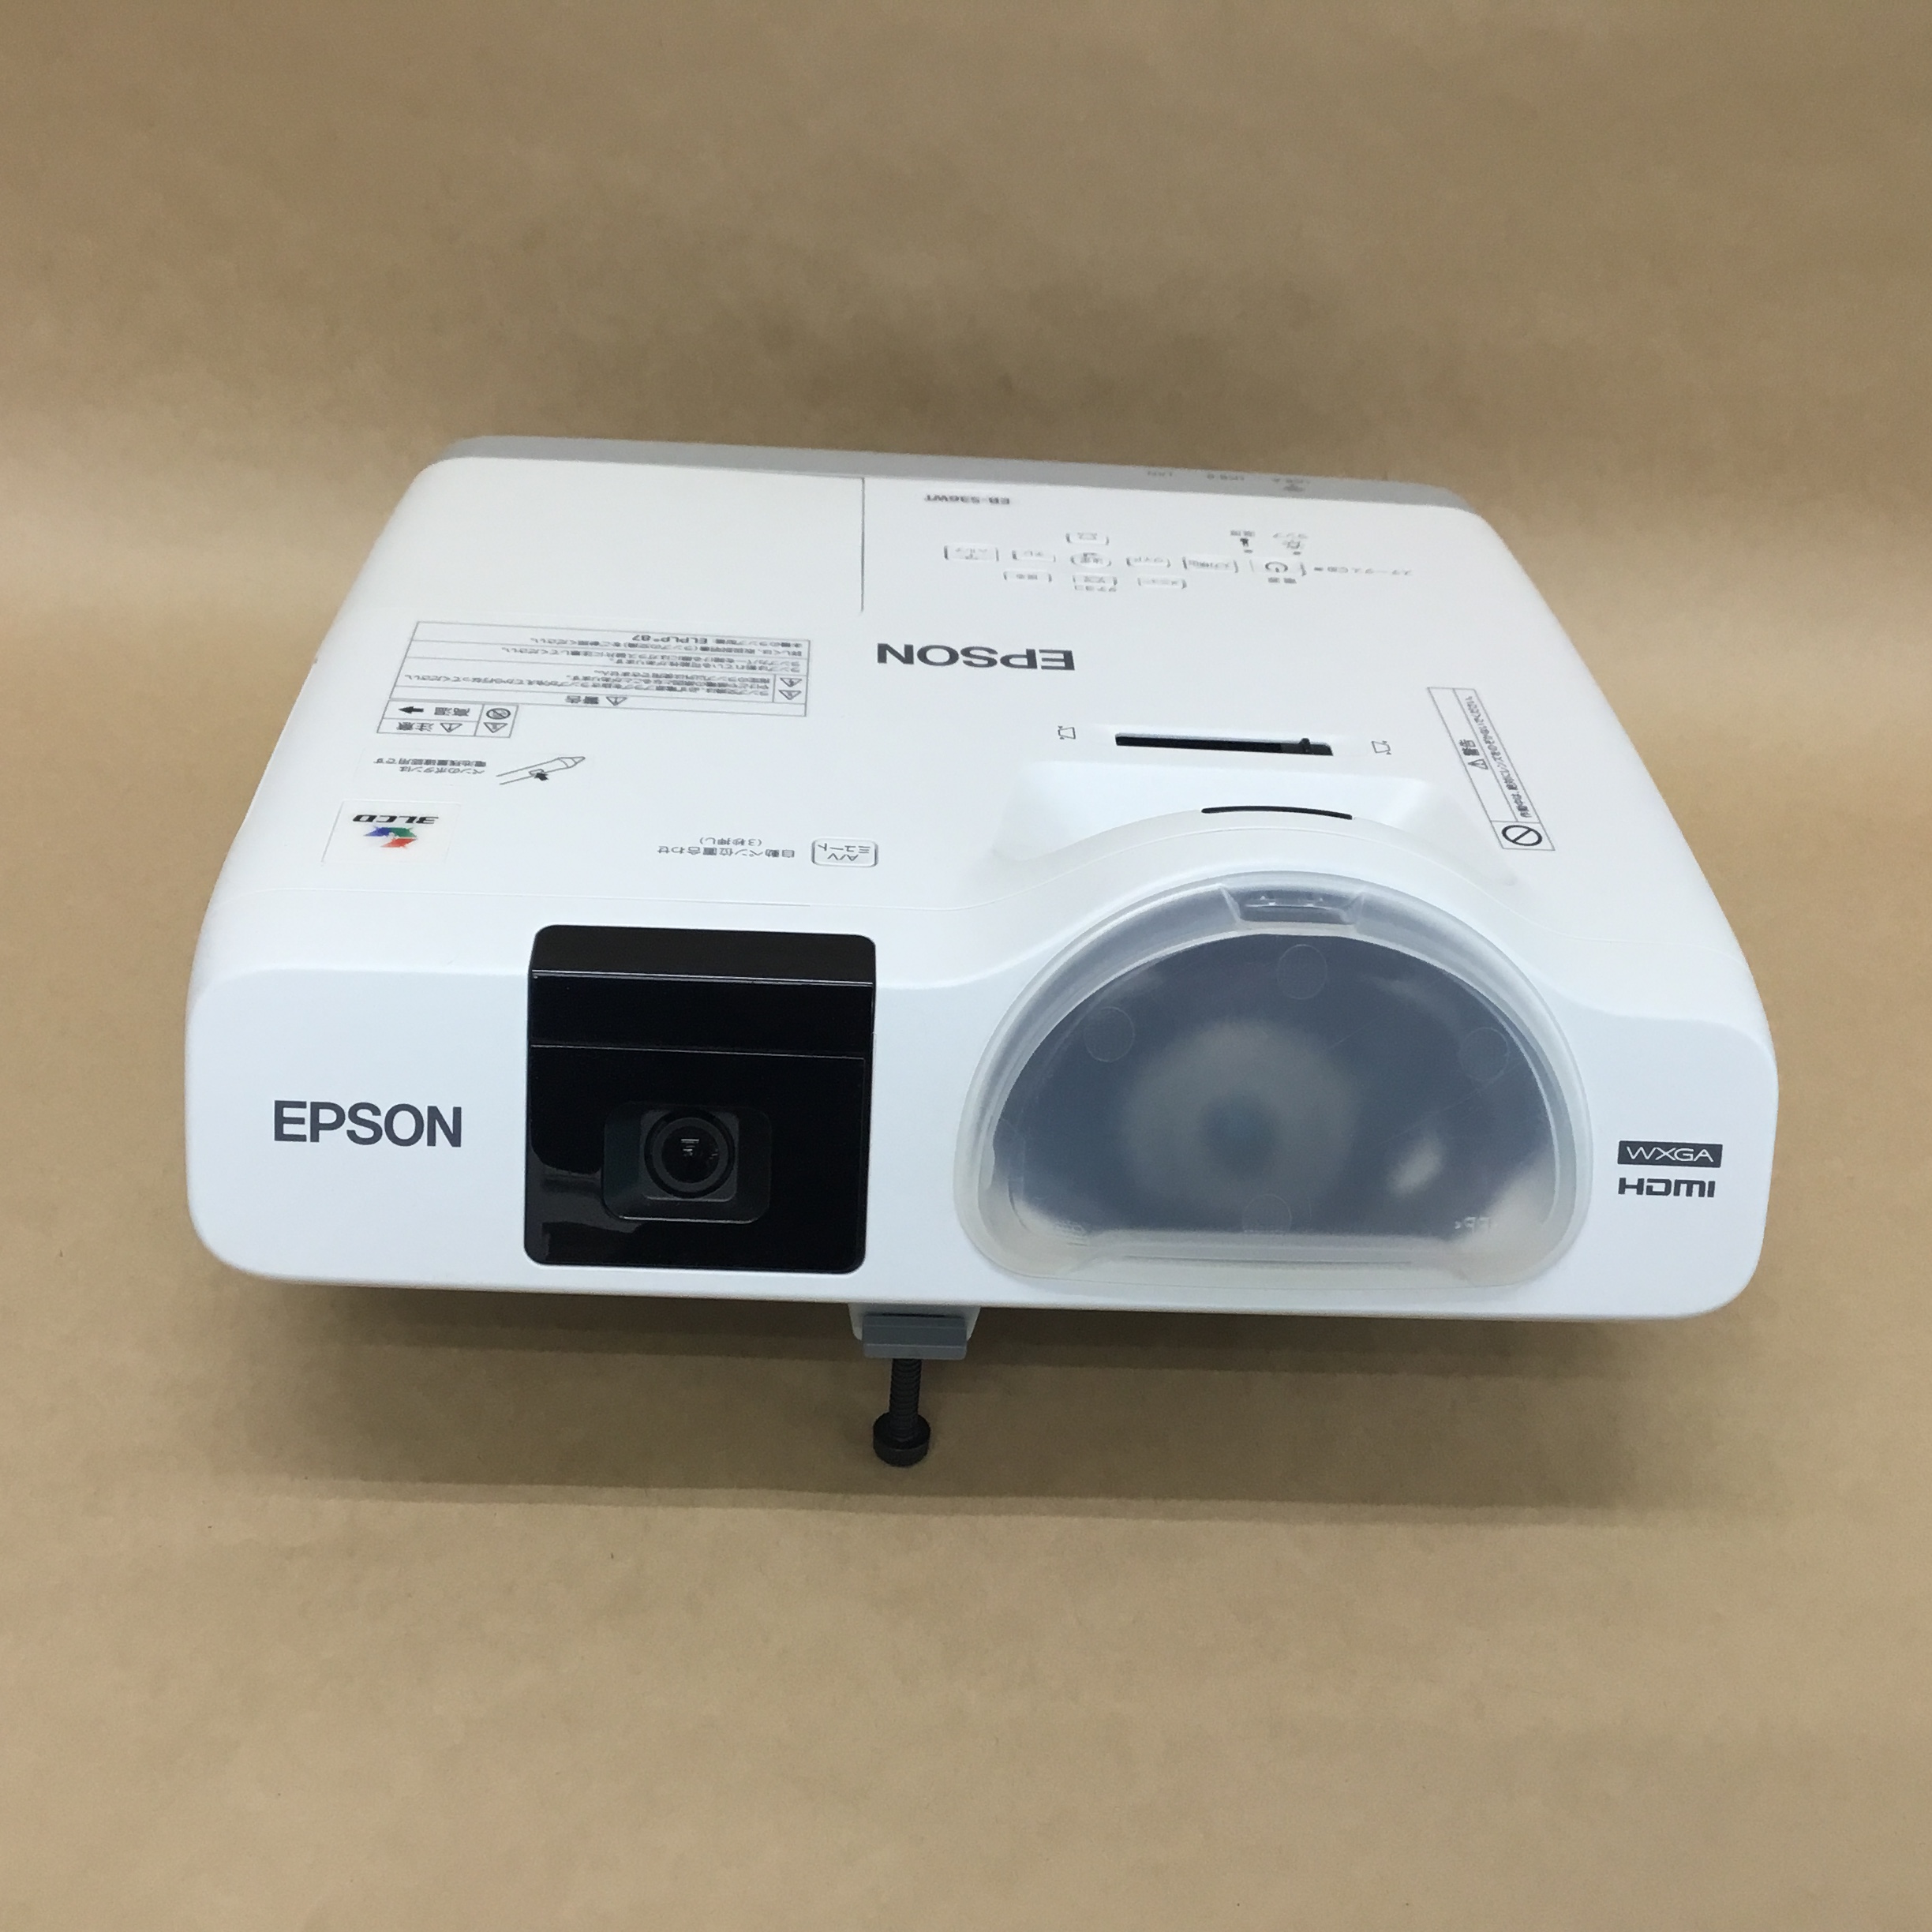 EPSON 超単焦点 プロジェクター EB-536WT 美品 ランプ時間 - テレビ 